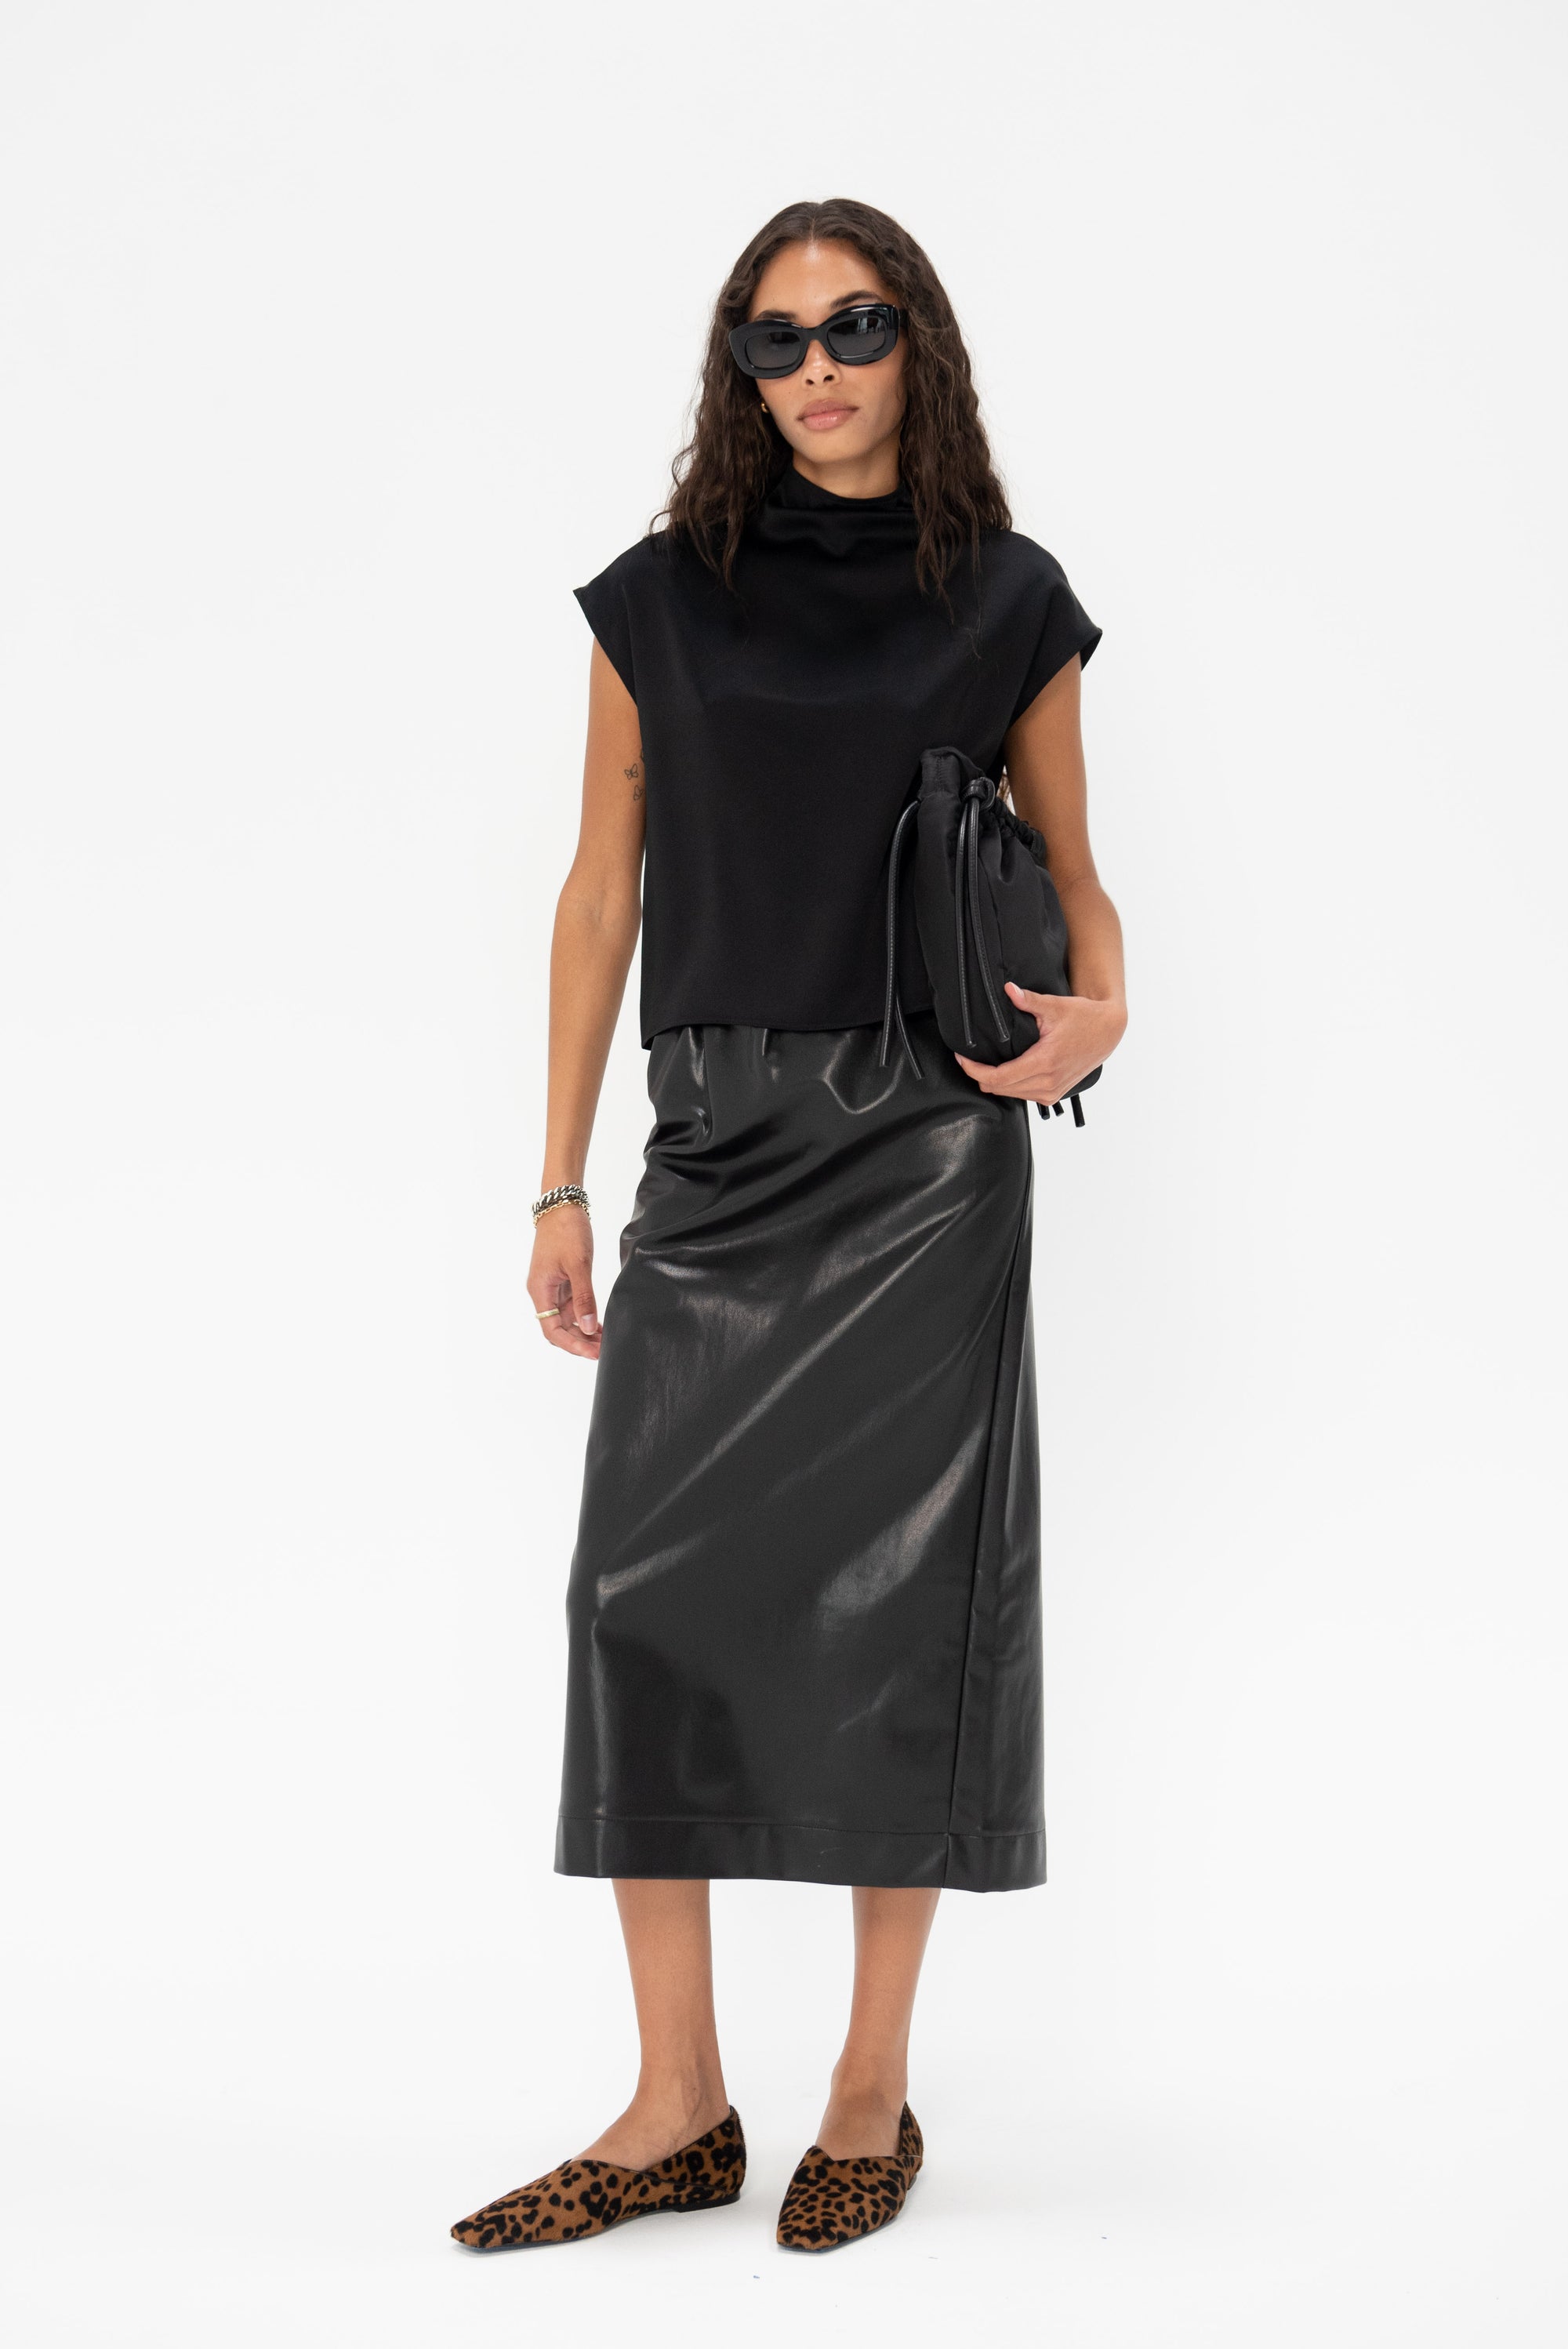 GAUCHERE - Skirt, Black